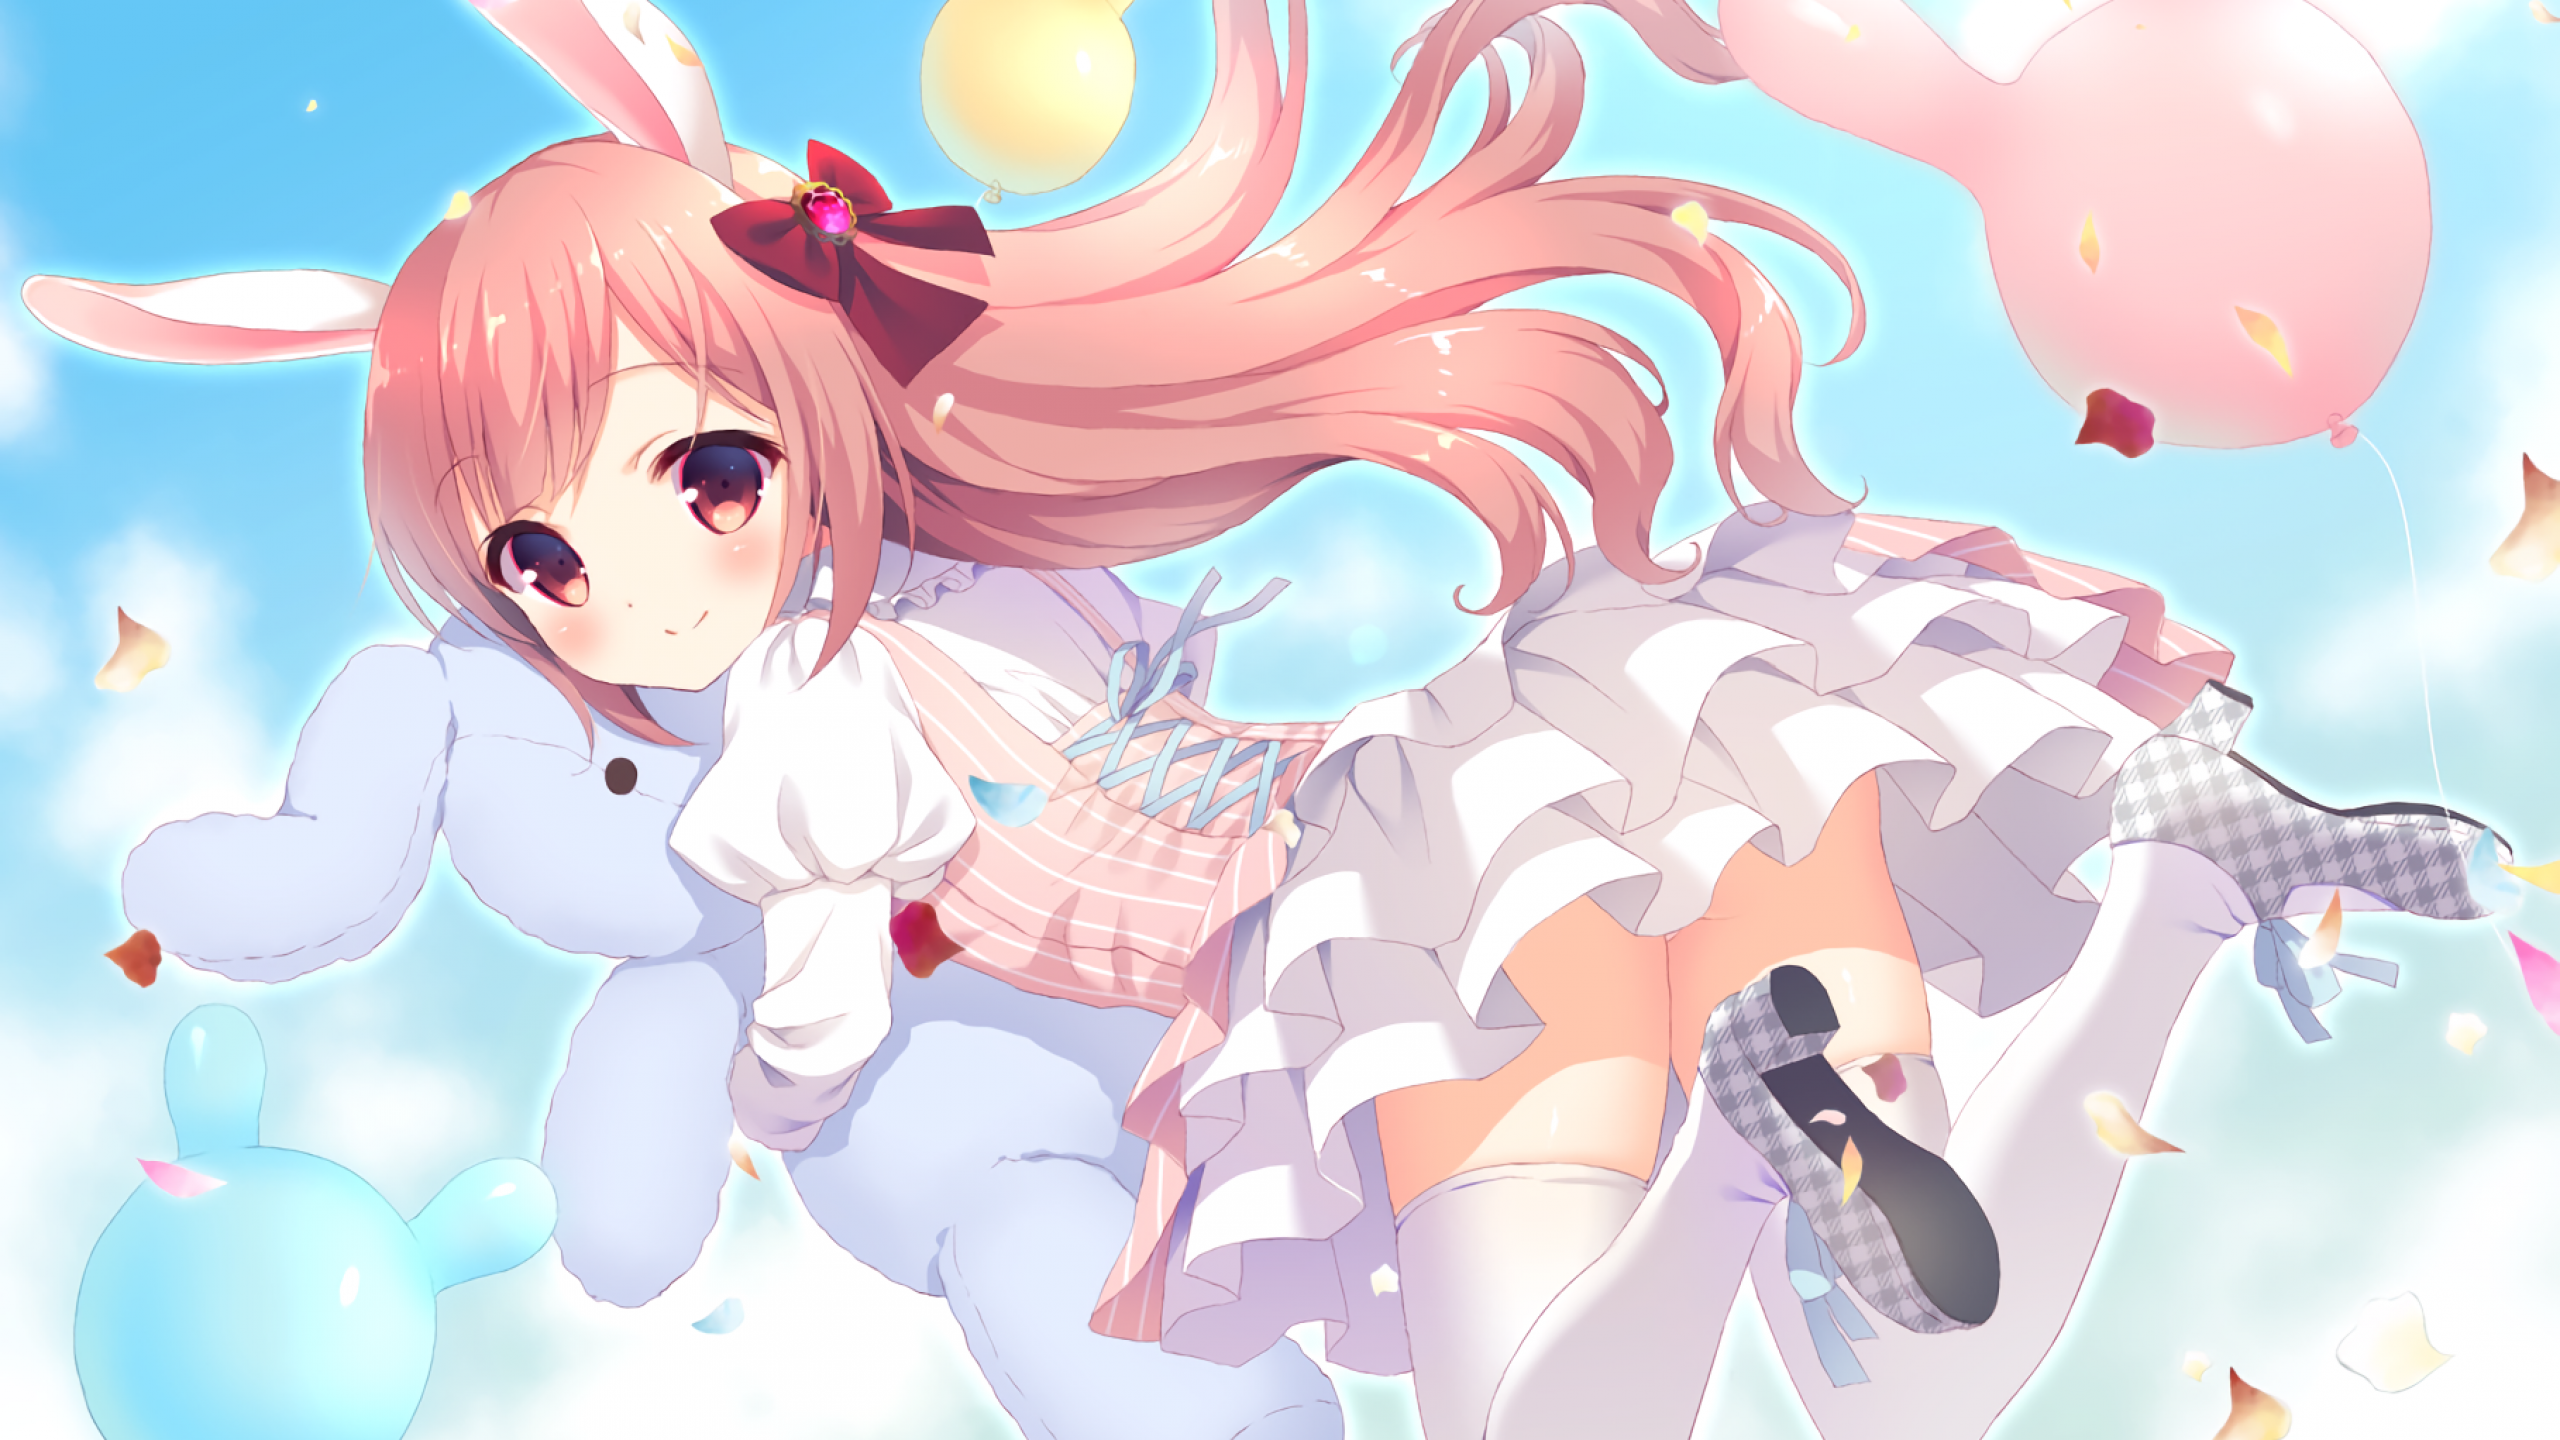 Download 2560x1440 Anime Girl, Bunny Ears, Loli, Dress, Jumping Wallpaper for iMac 27 inch